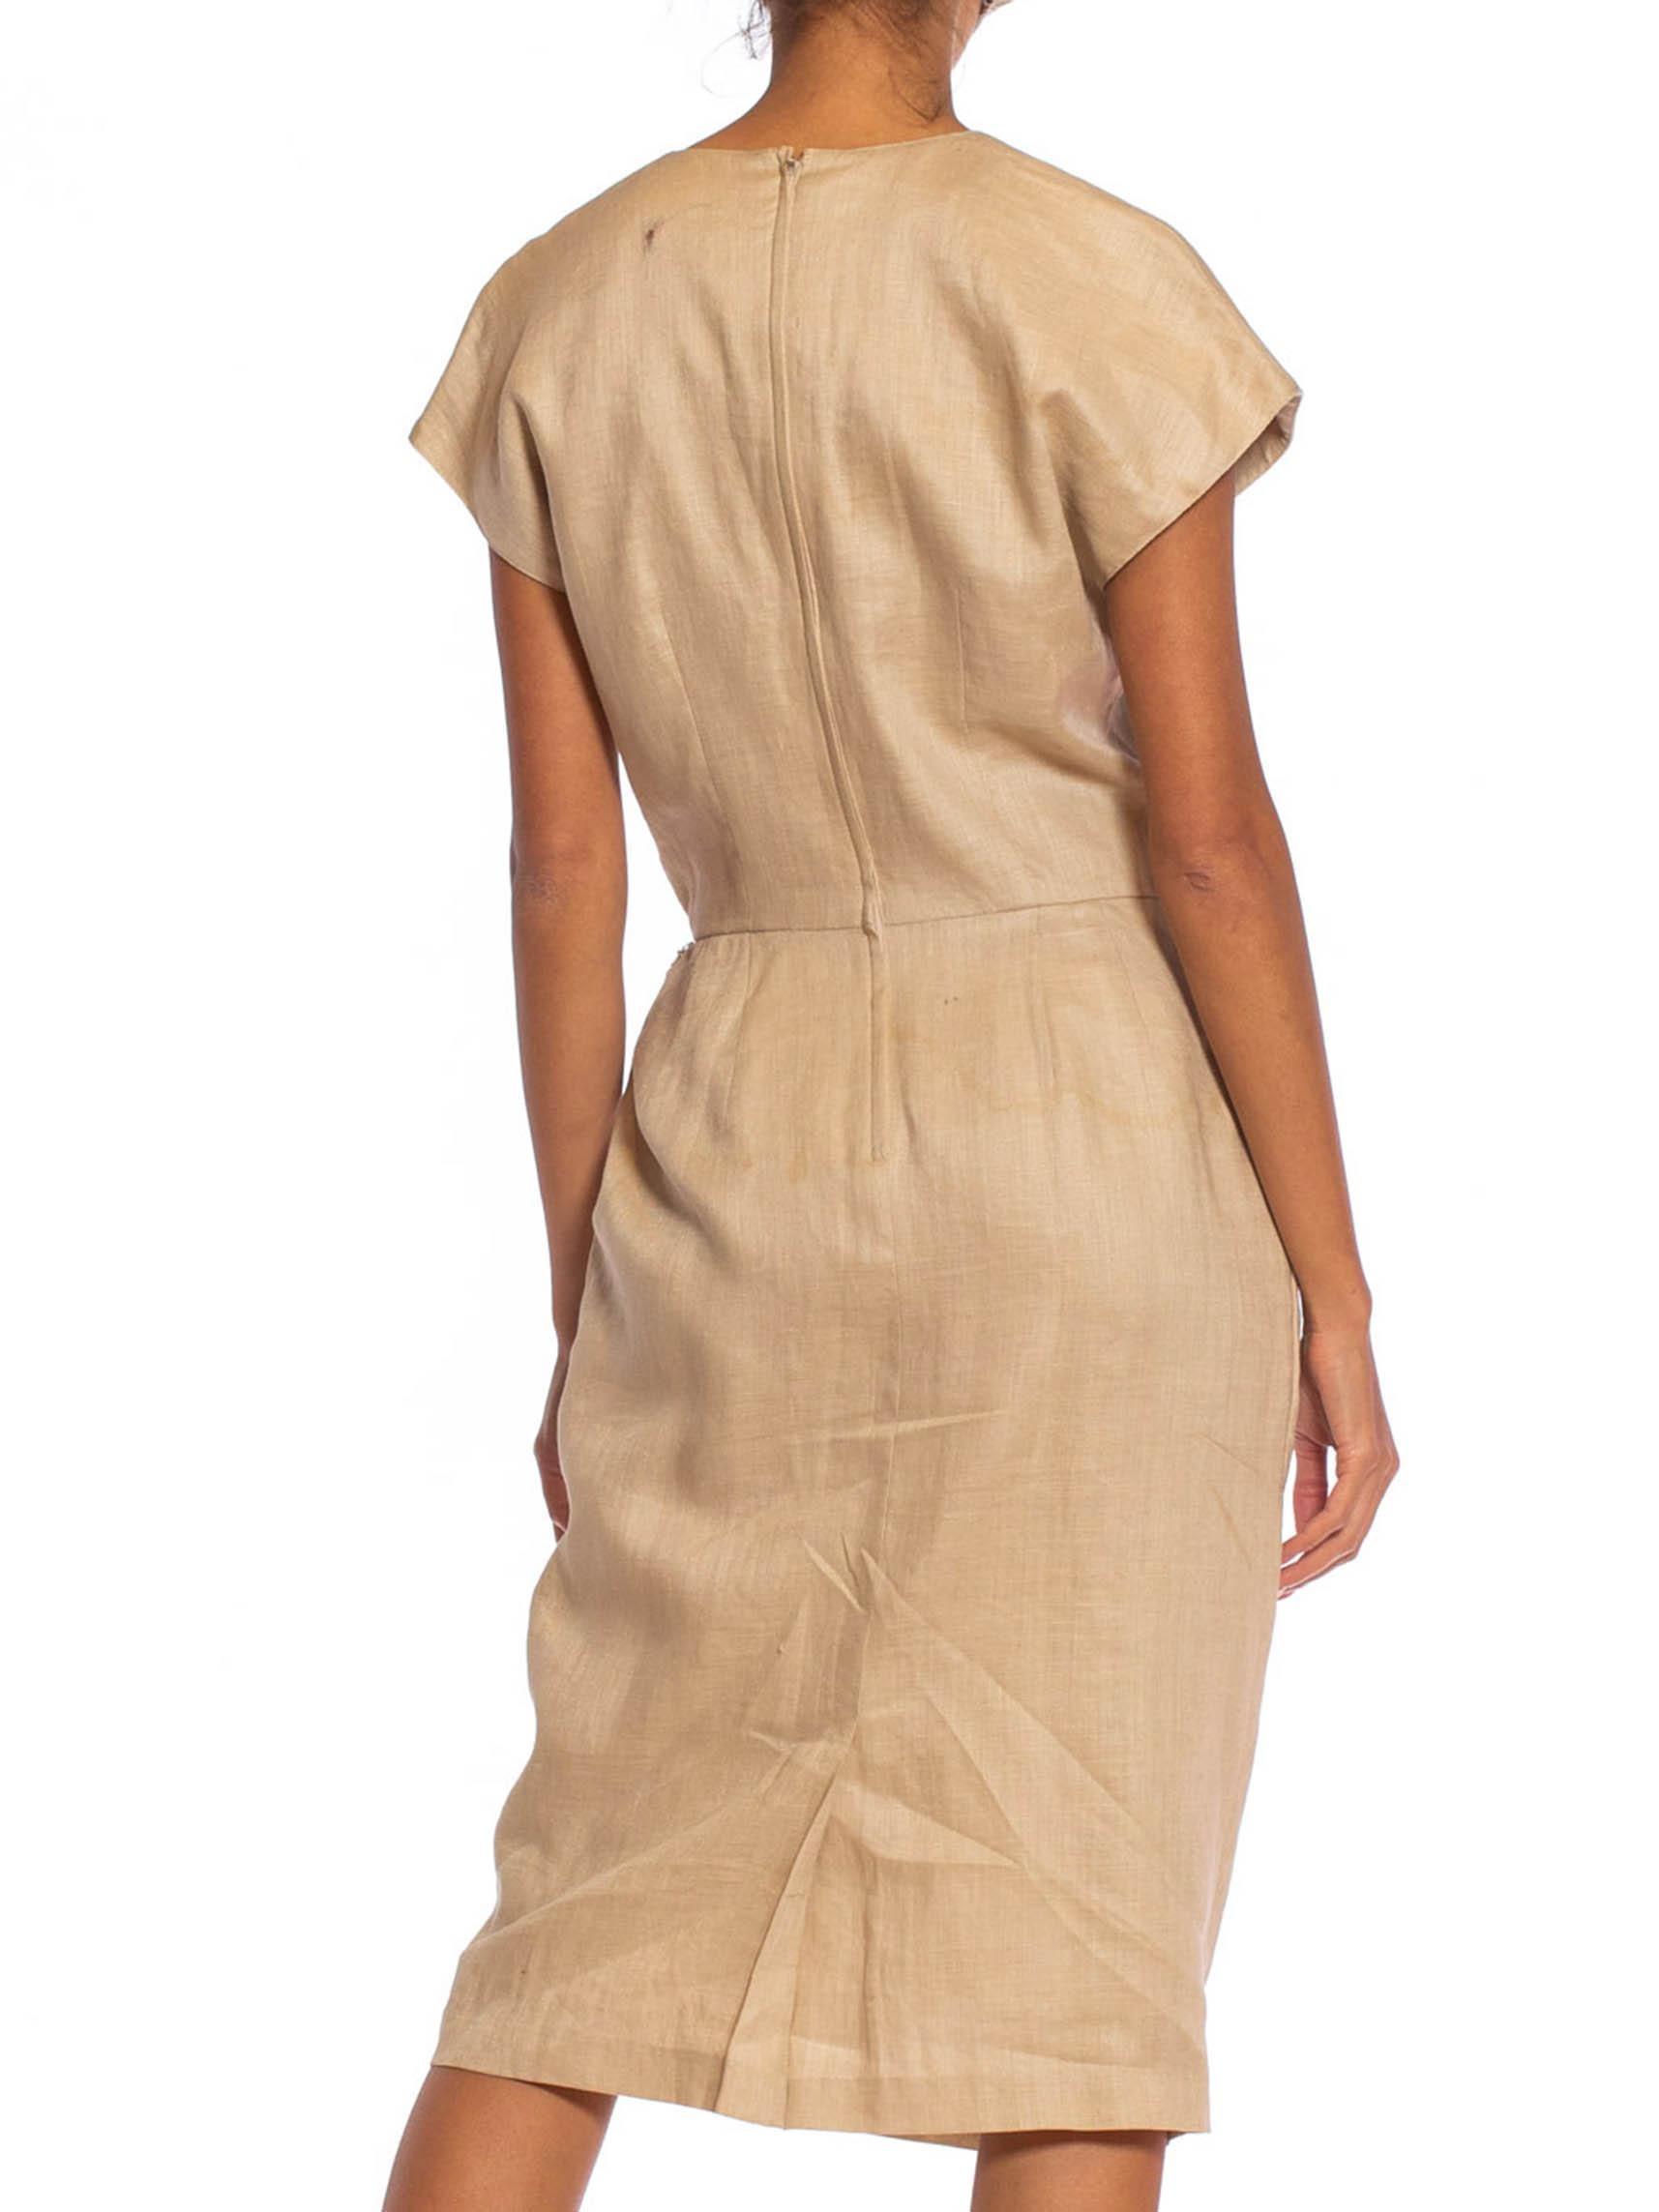 1980S Beige Linen Blend Dress Lined In Rayon For Sale 4